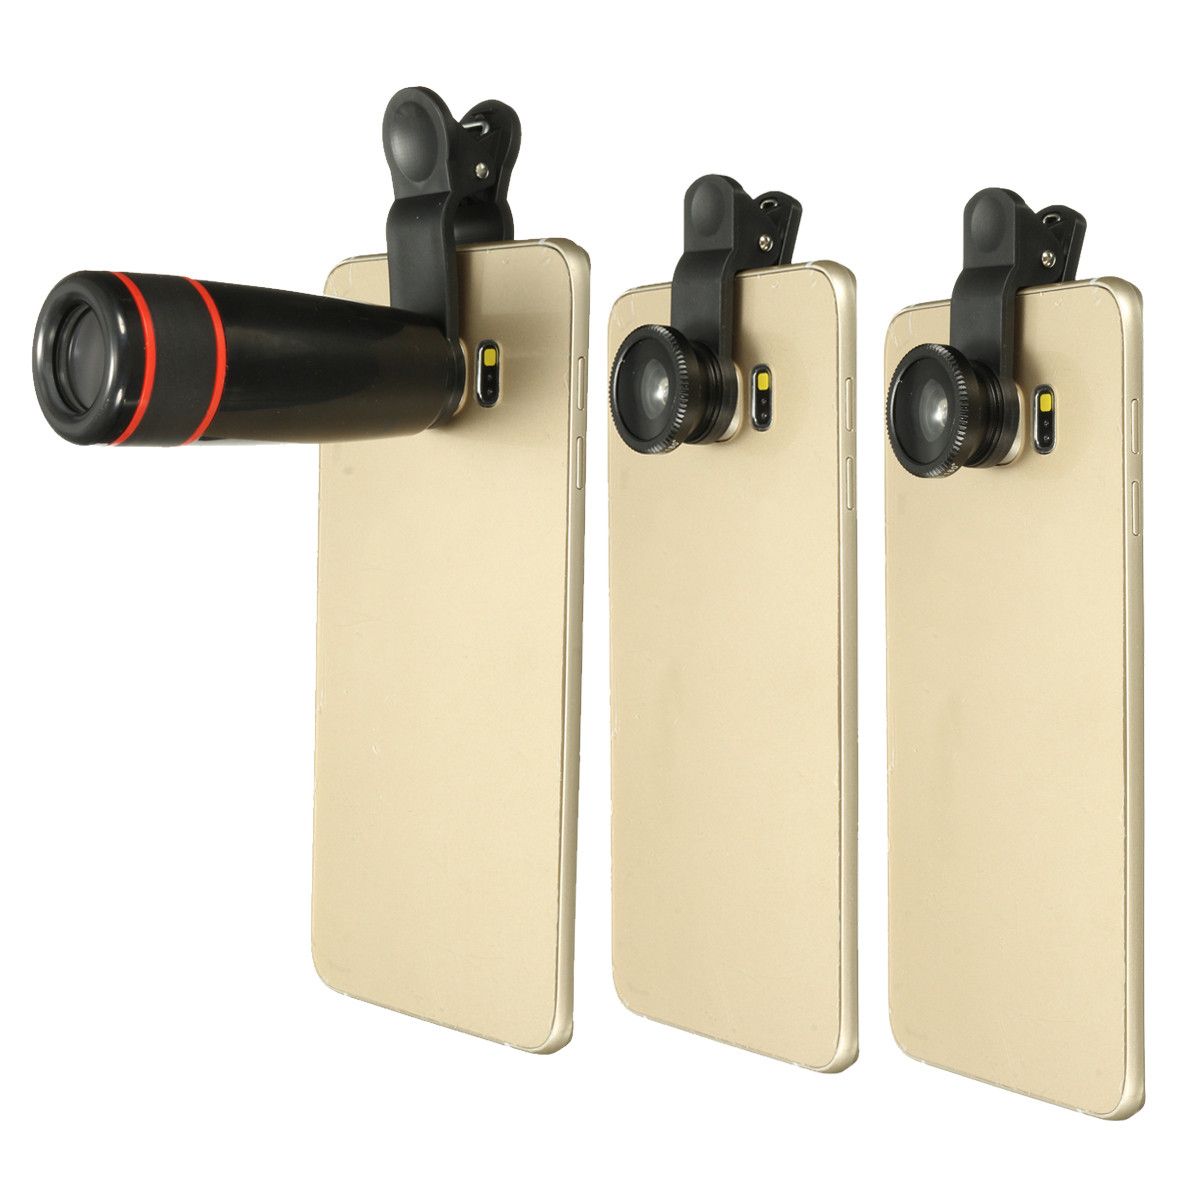 8X-Telephoto-Fisheye-Lens-bluetooth-Selfie-Shutter-Stick-Mini-Tripod-Set-Kit-for-Smartphone-Photogra-1168037